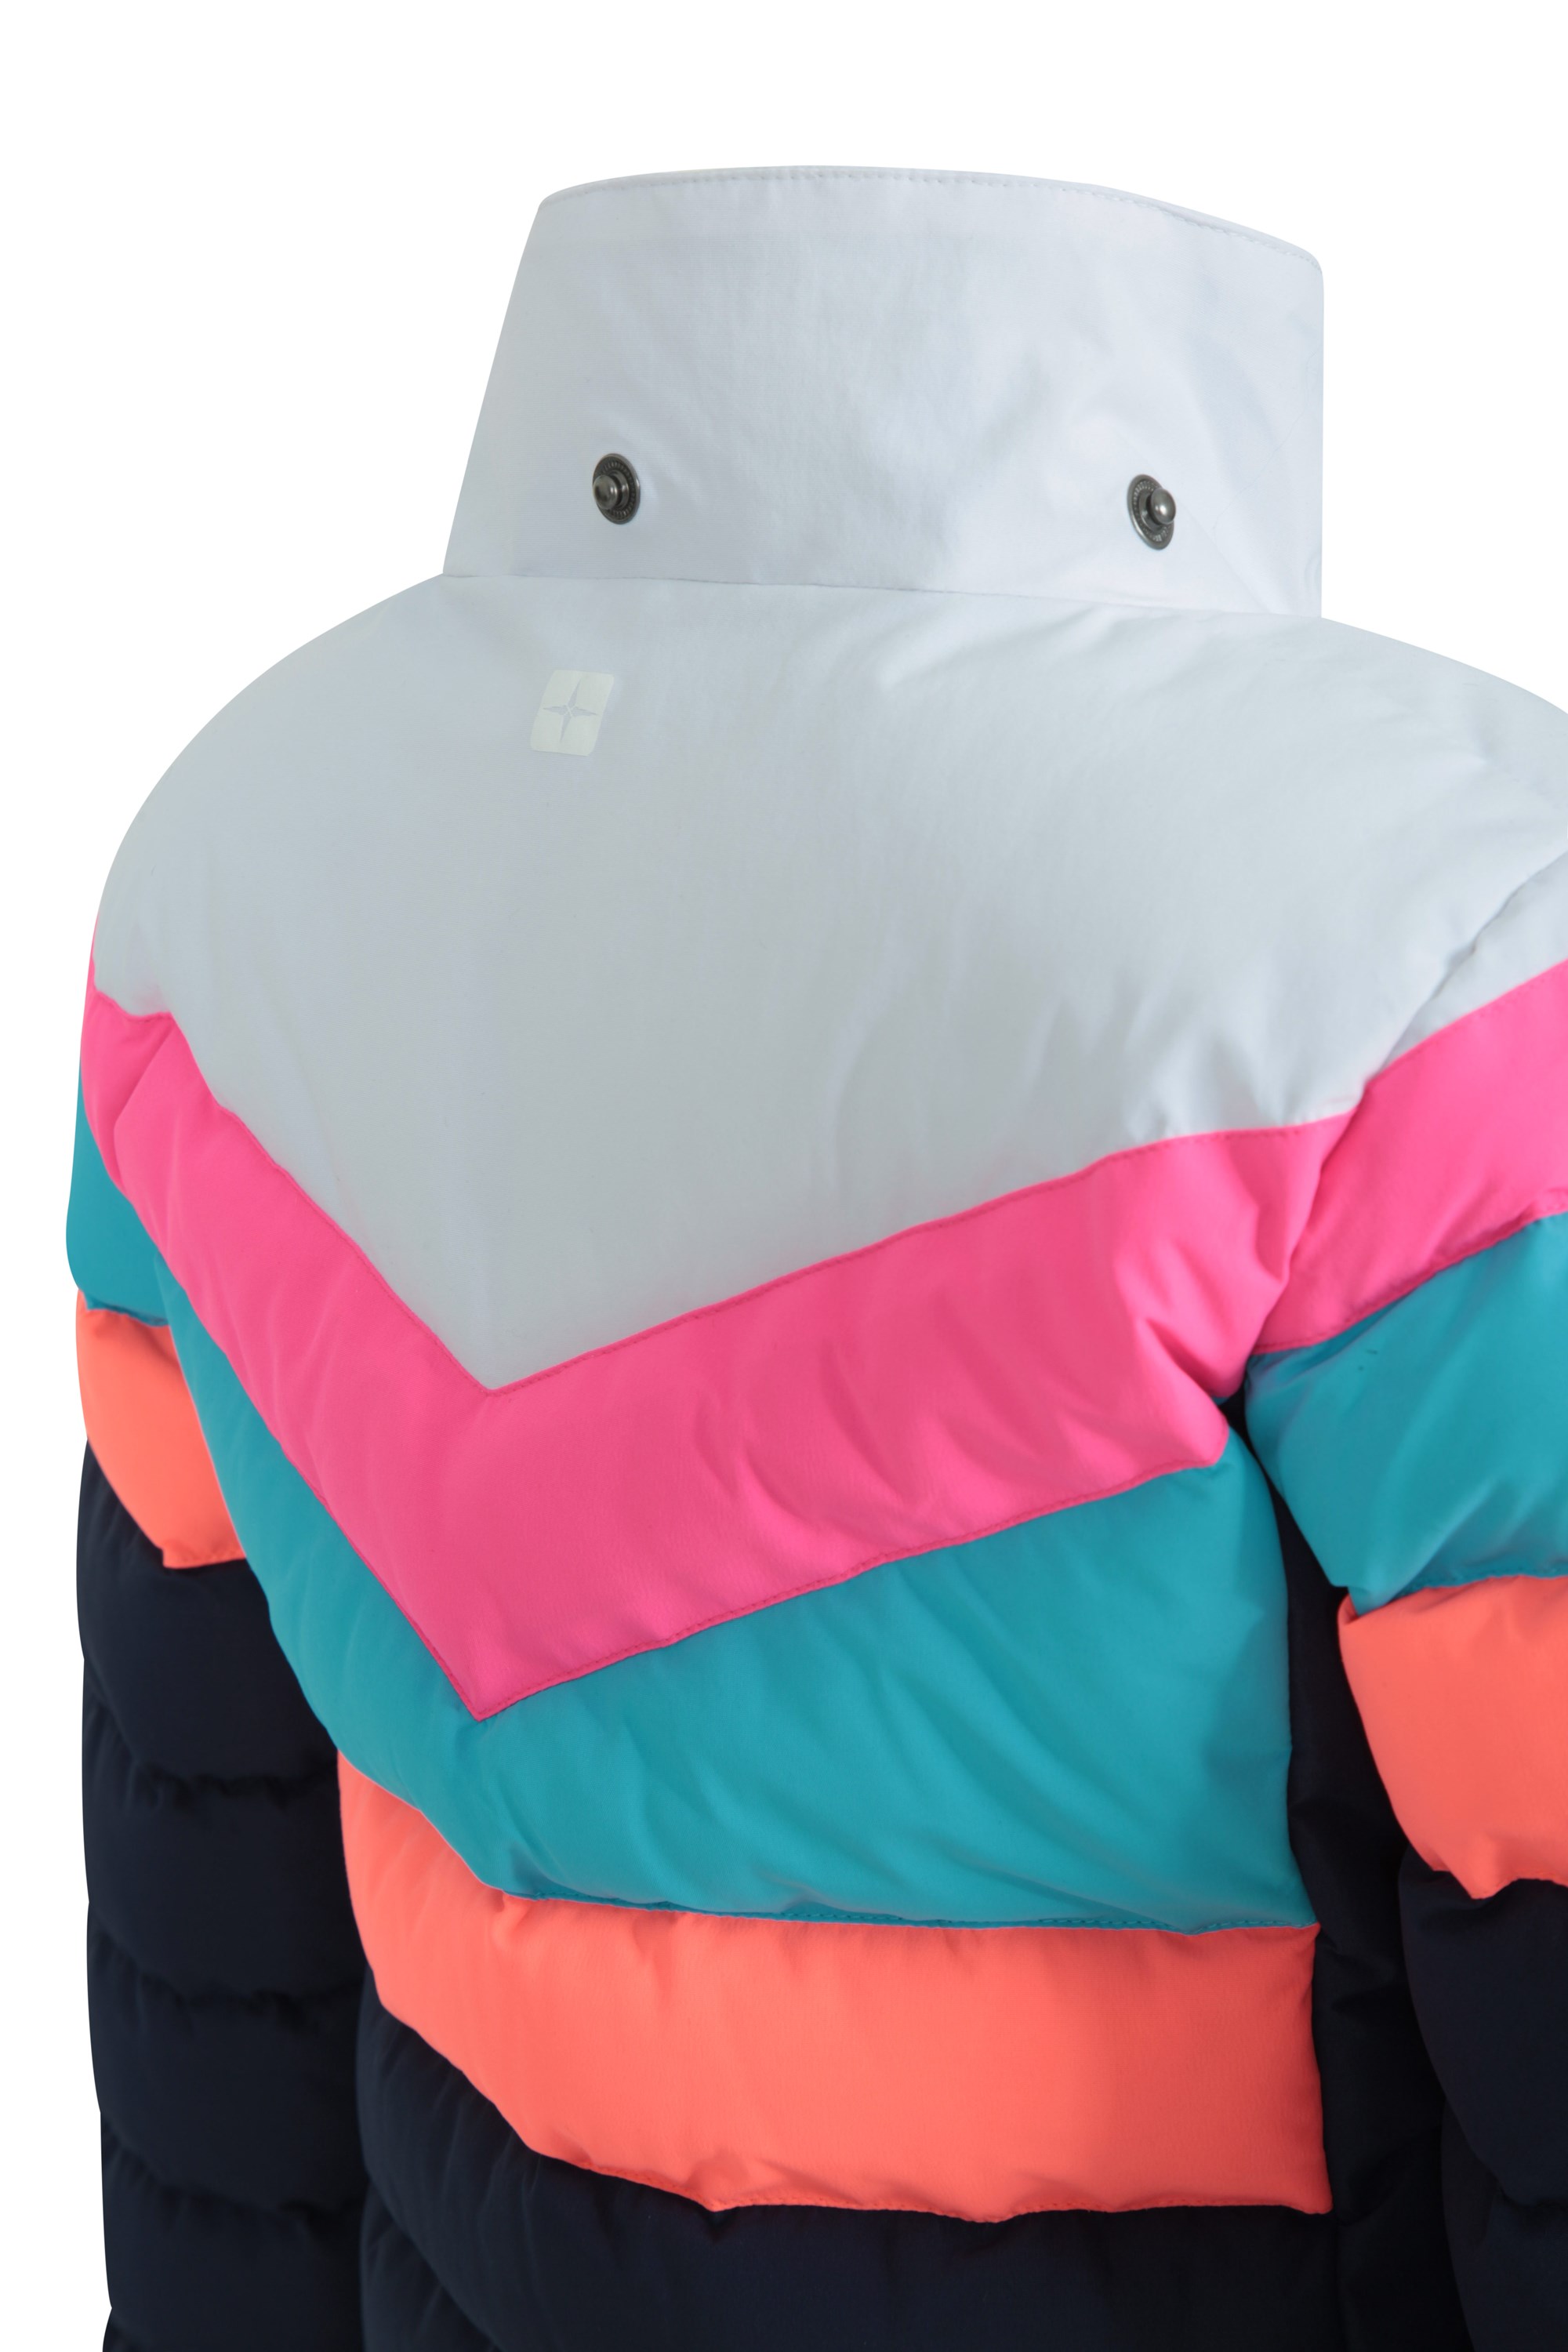 Mountain Warehouse Arctic Winter Kids Ski Jacket Water Resistant